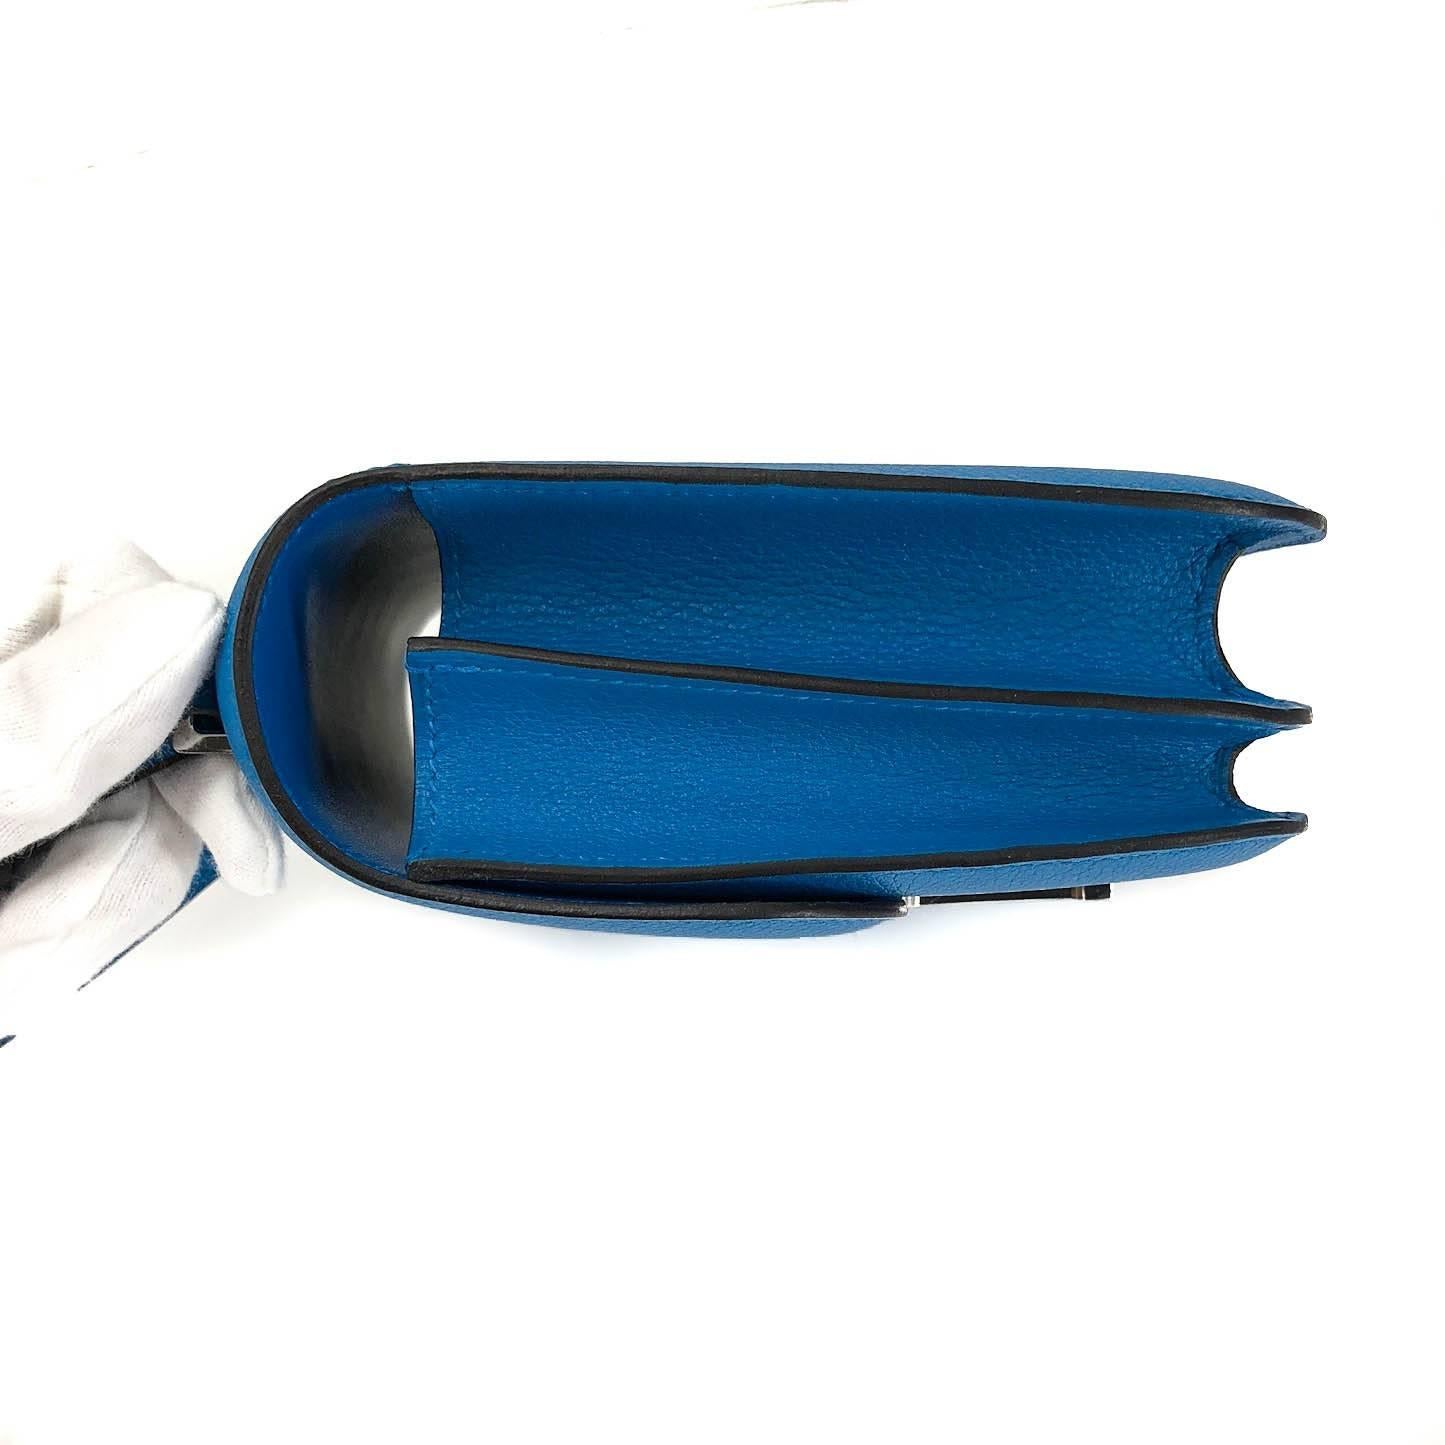 Hermes Cross body Handbag Constance 18 in Bleu Zanzibar with Palladium Hardware For Sale 3